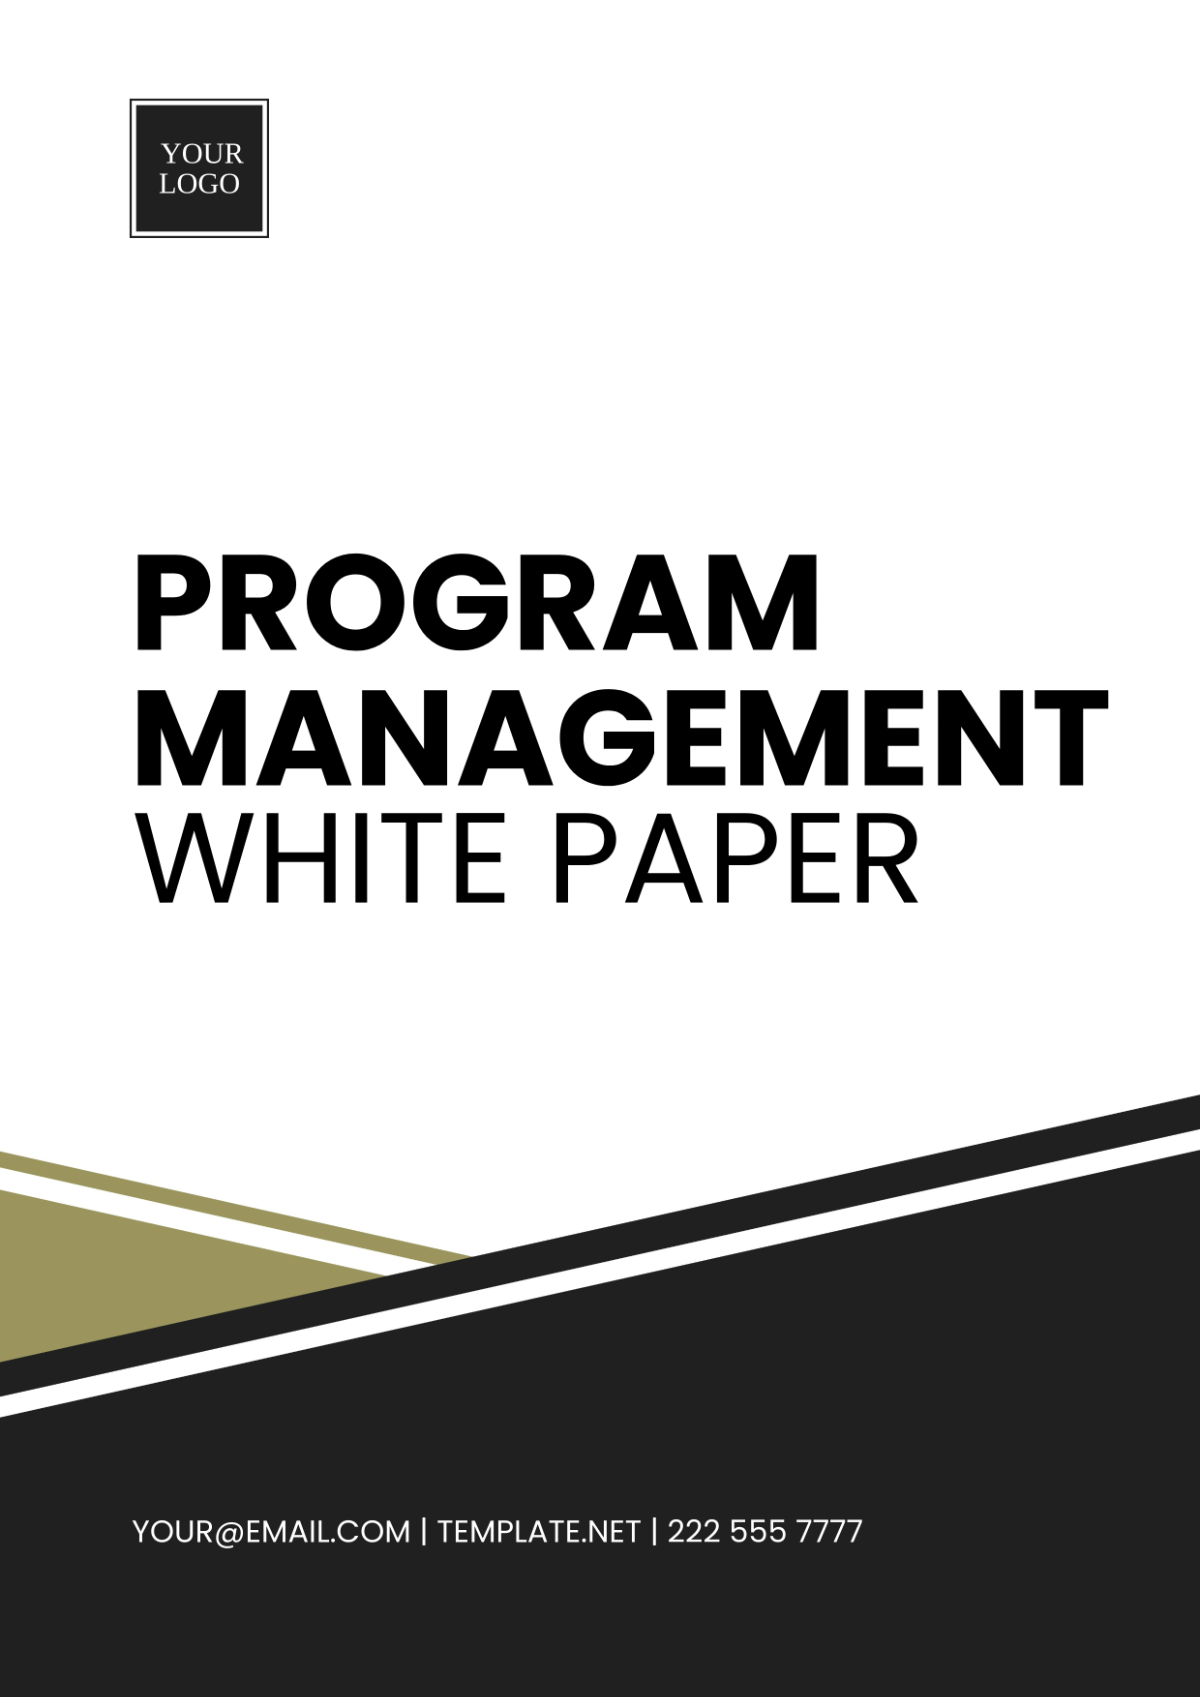 Program Management White Paper Template